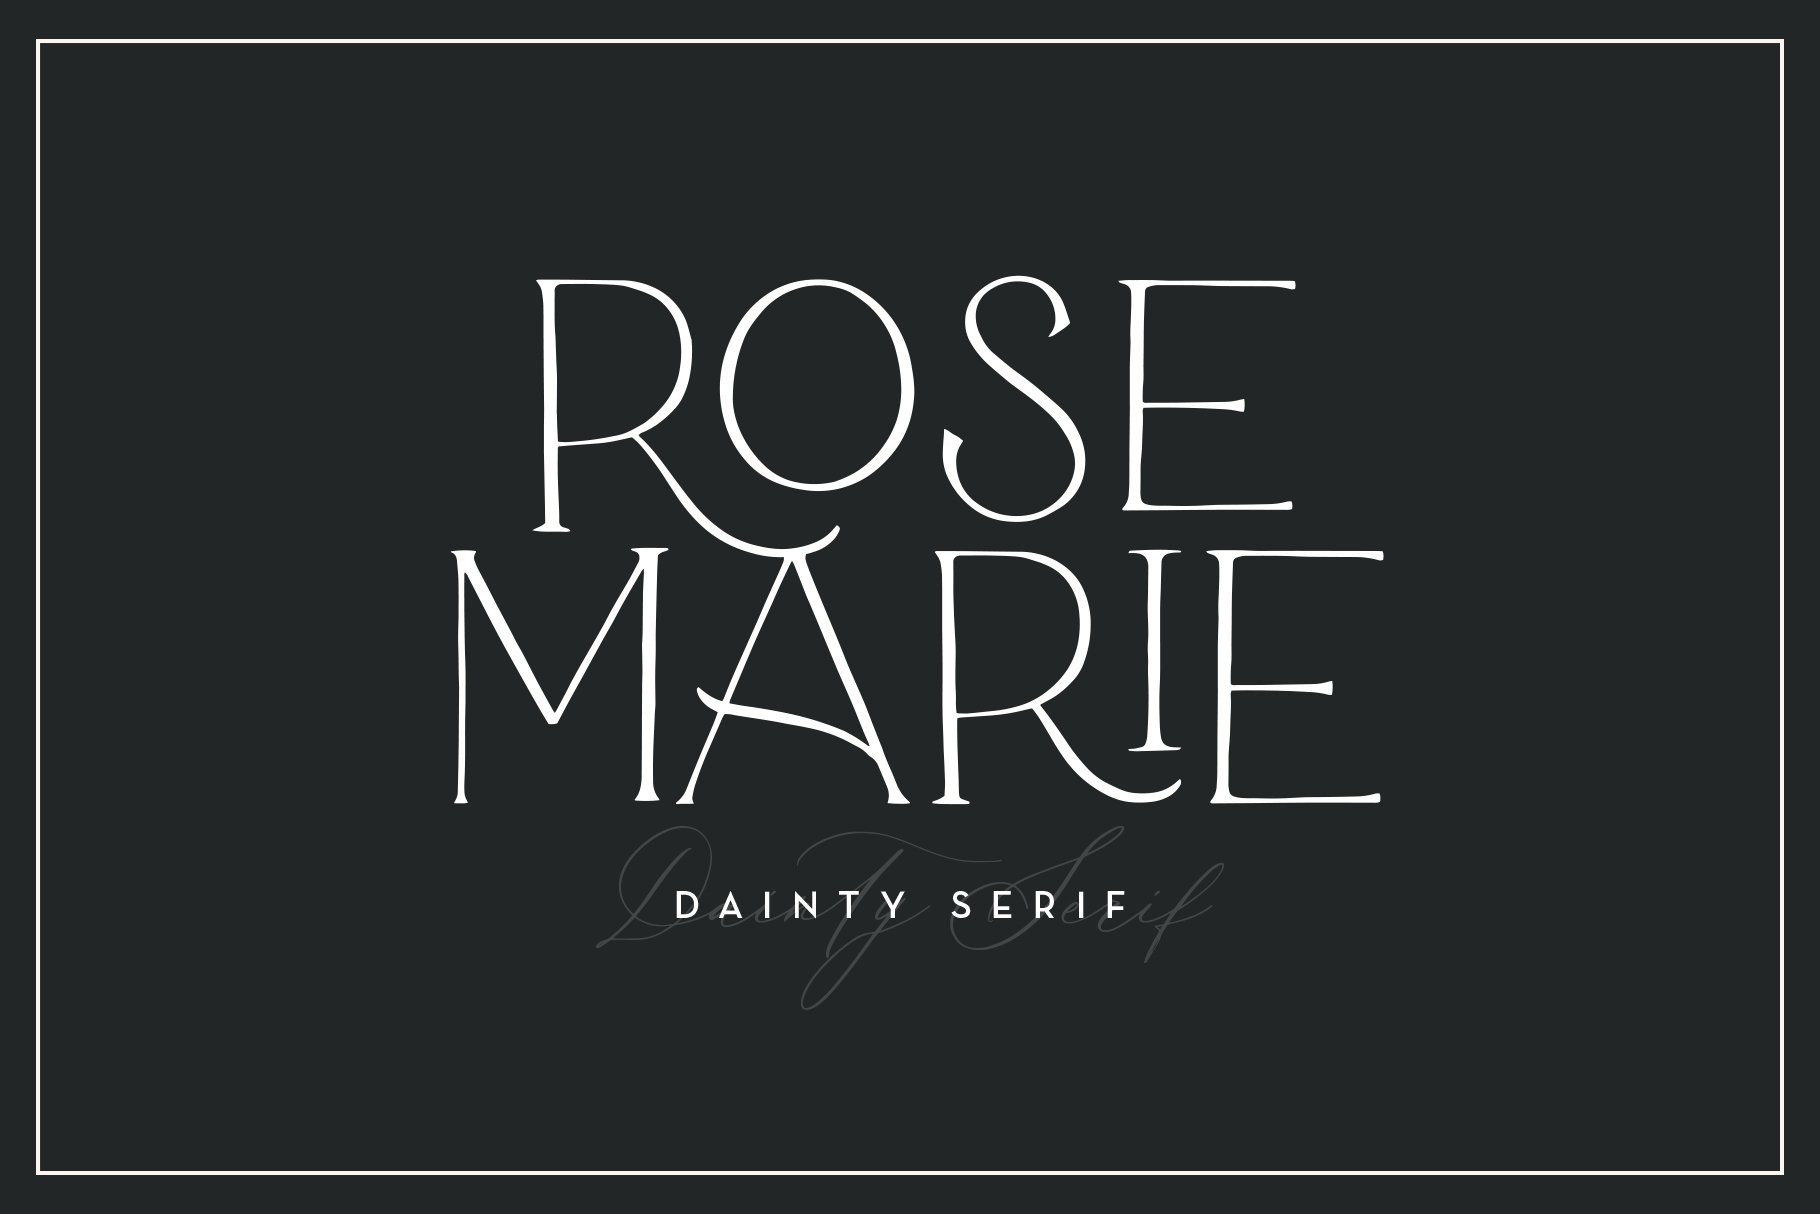 Rosemarie Dainty Serif cover image.